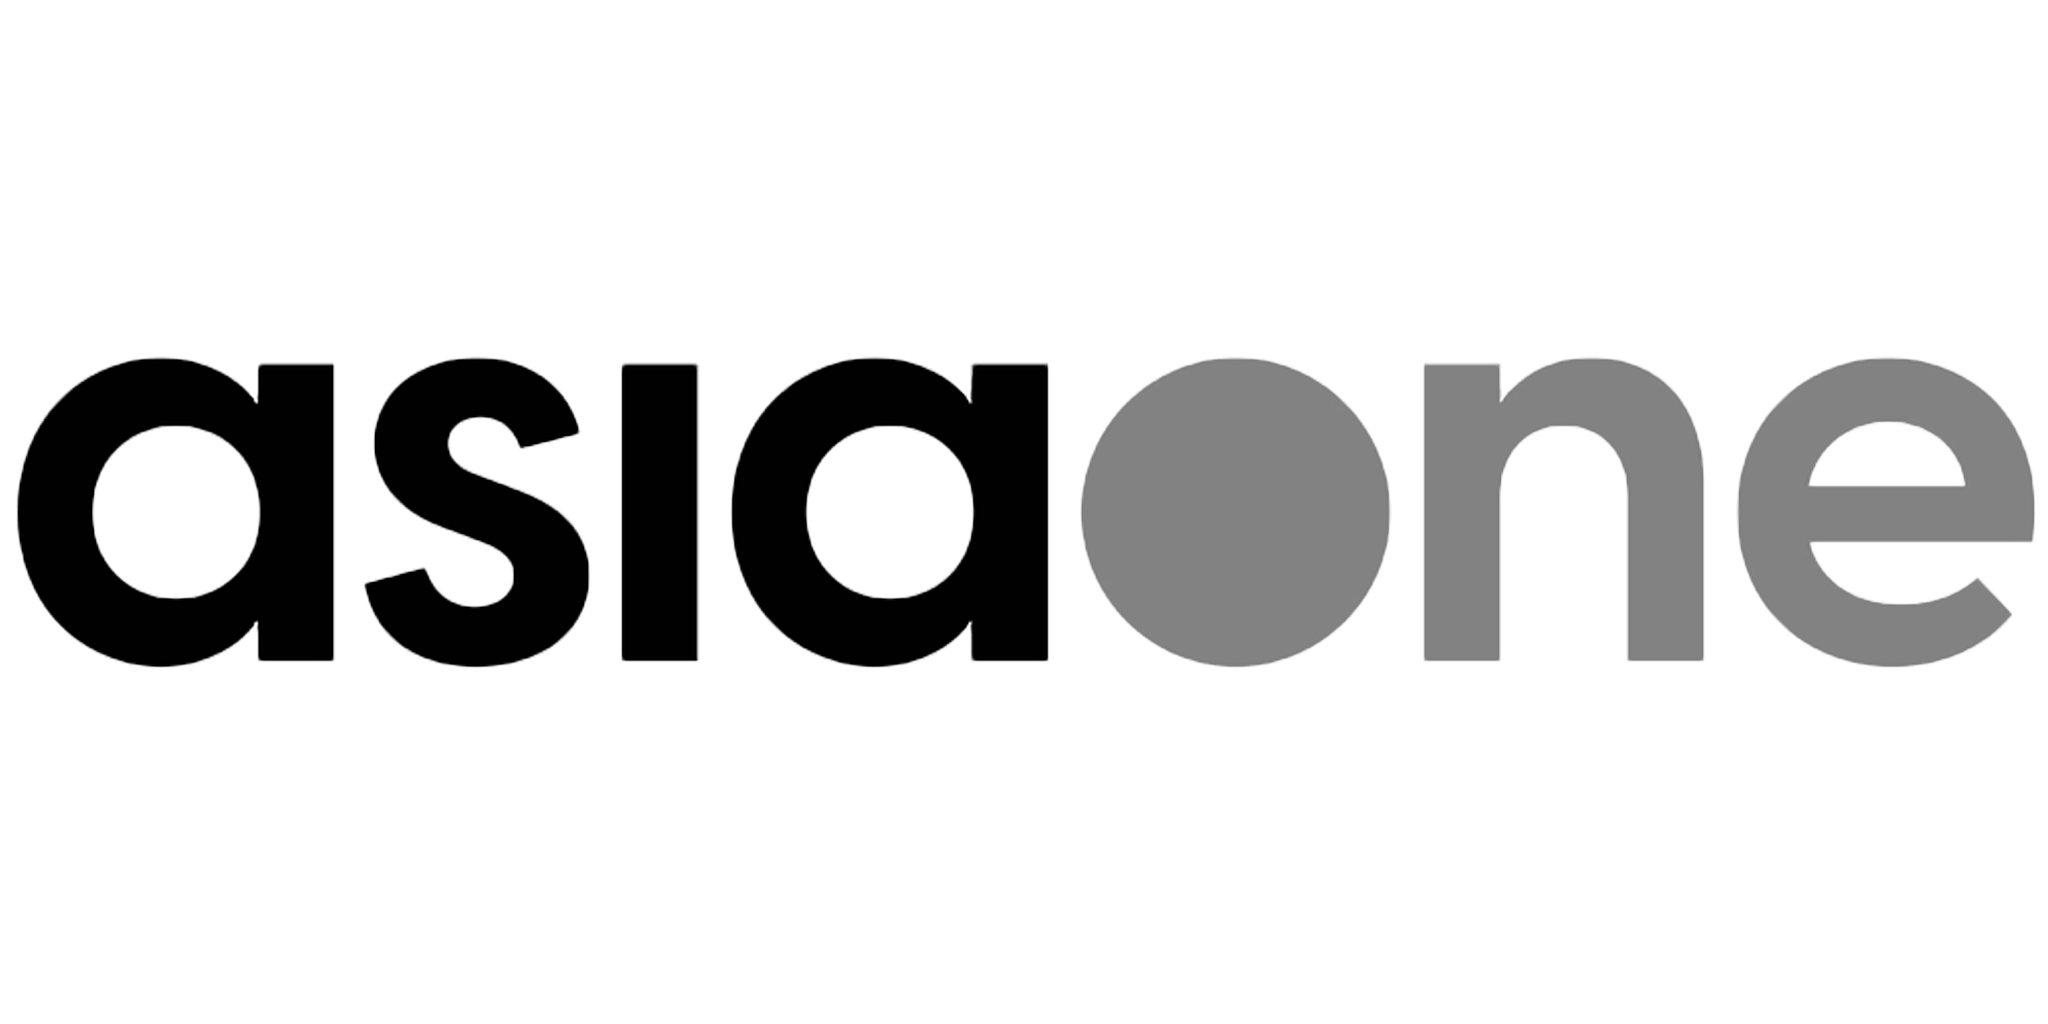 asiaone logo